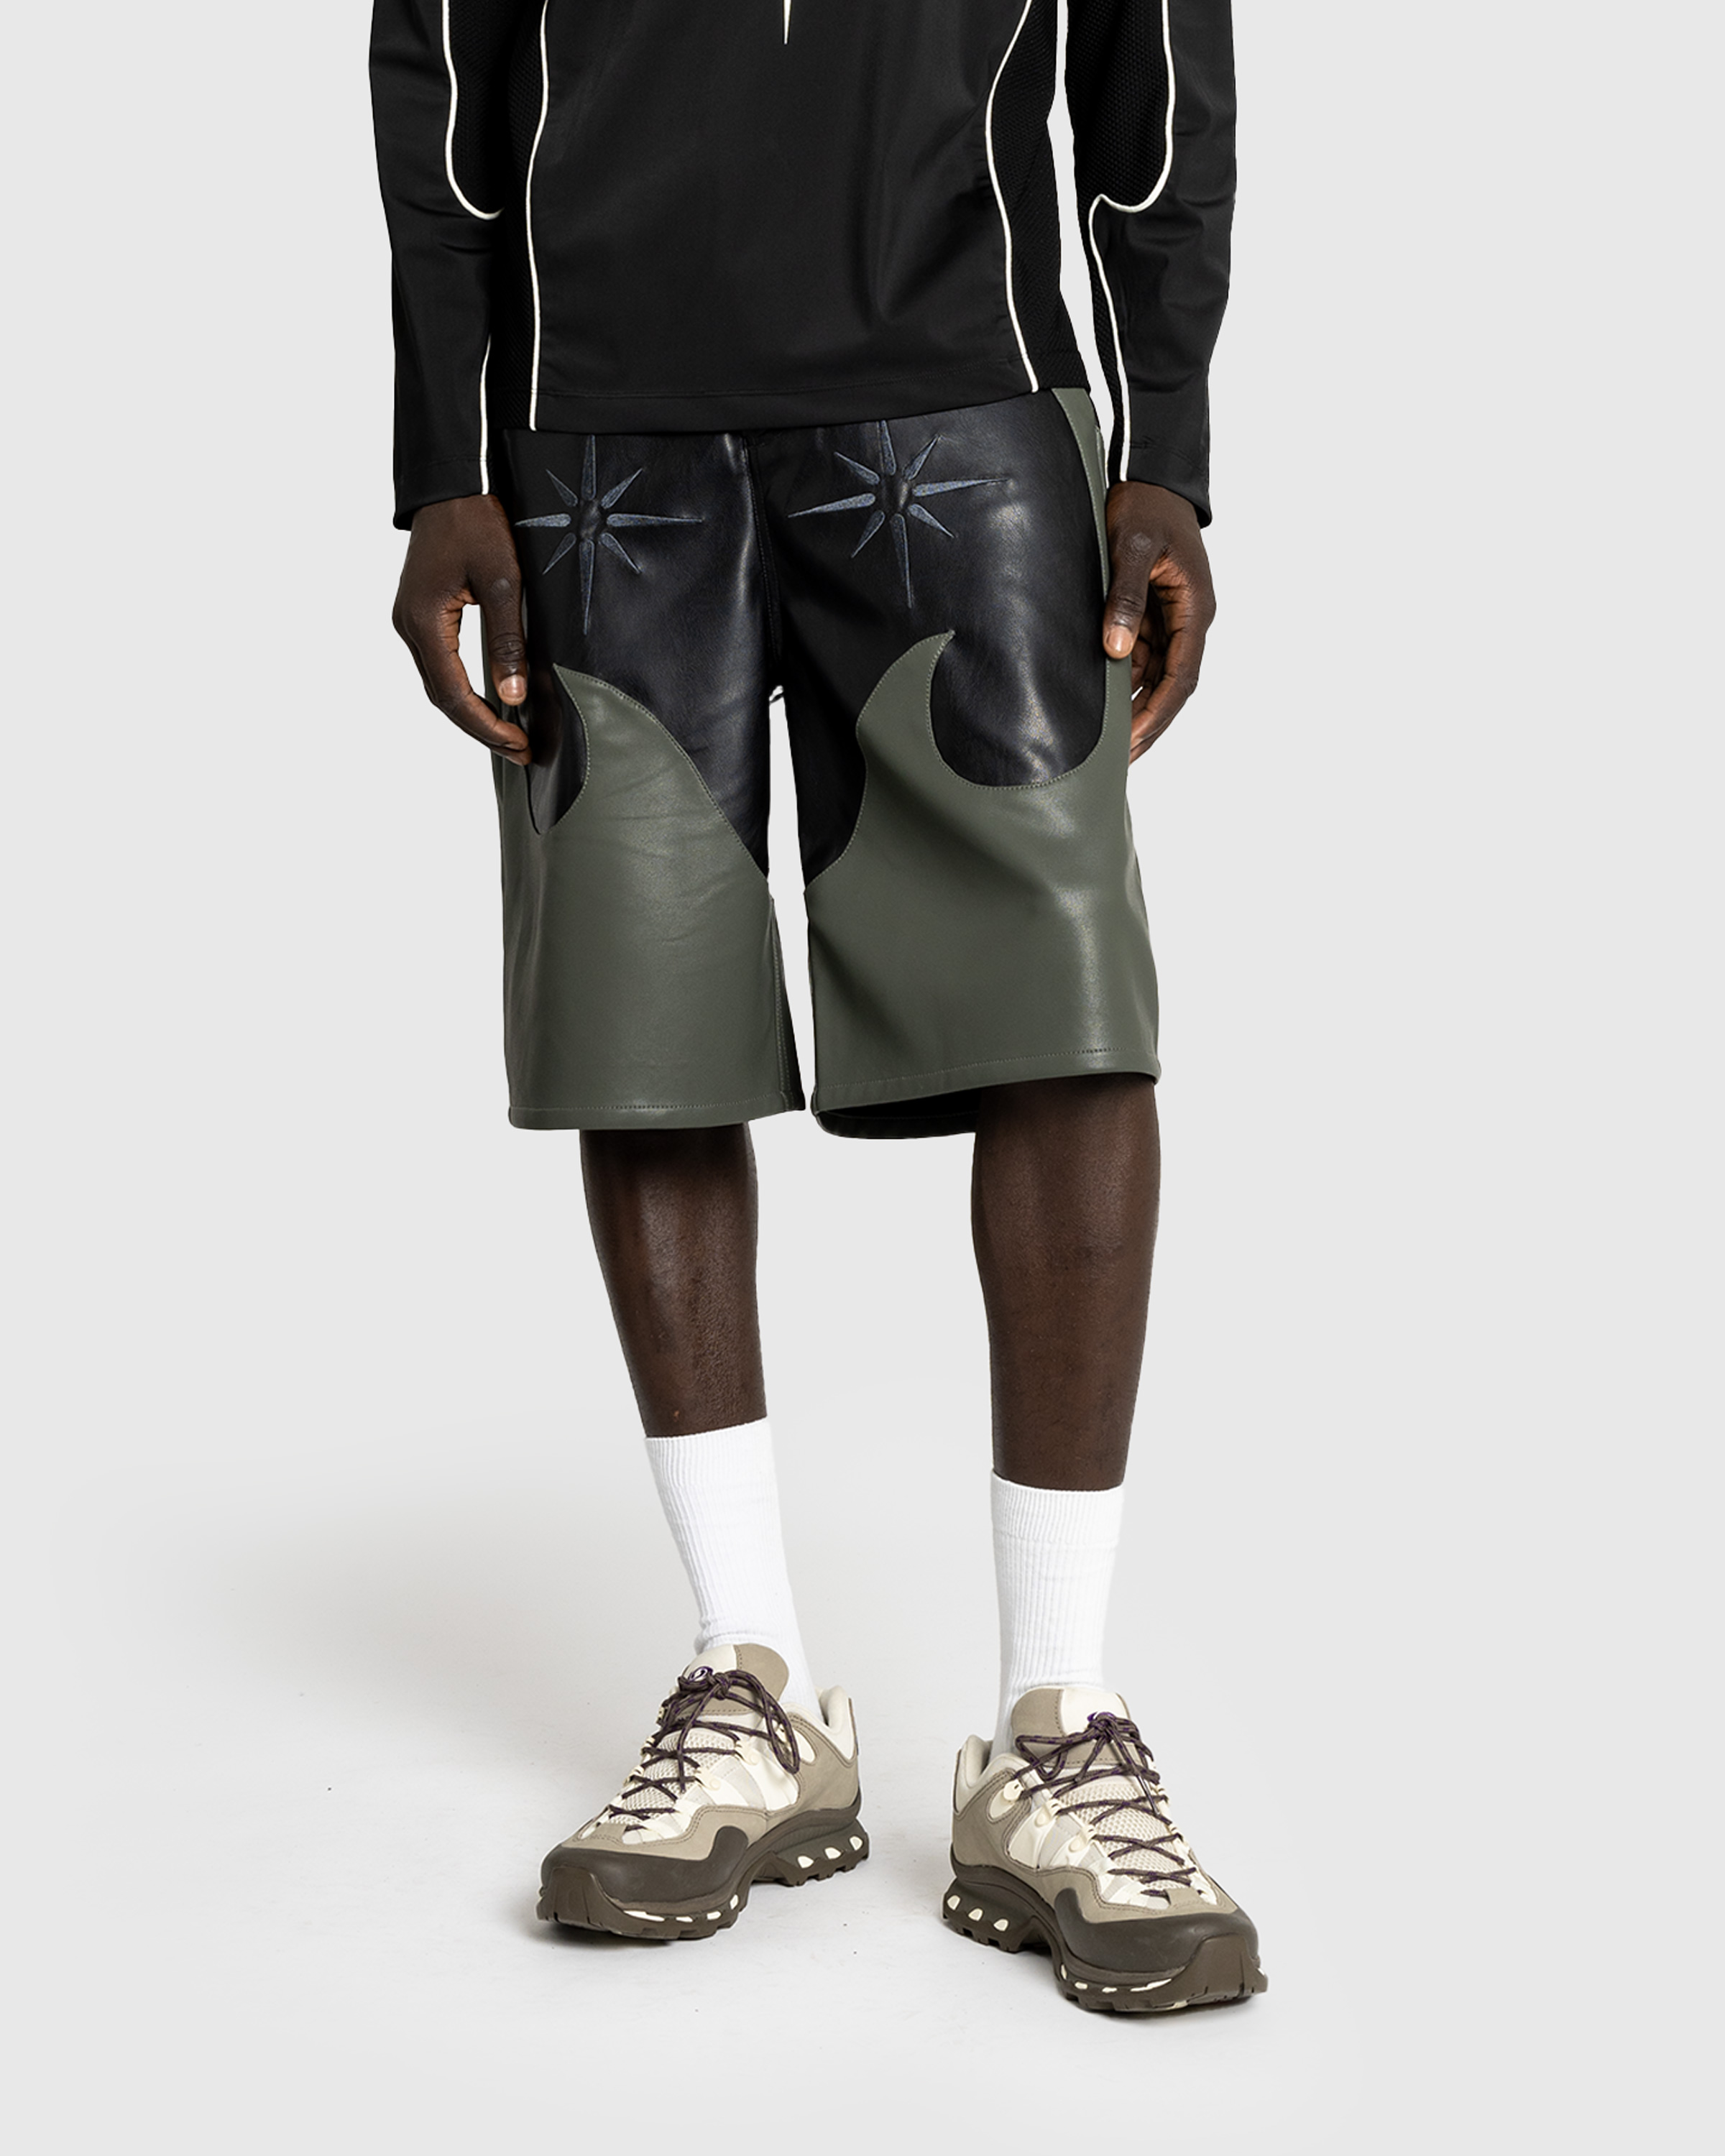 KUSIKOHC – Burn Detail Faux Leather Shorts Black - Shorts - Black - Image 2